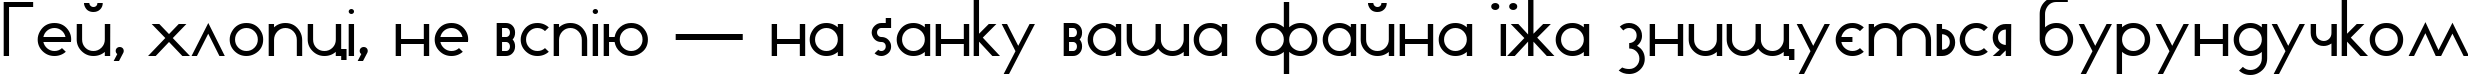 Пример написания шрифтом Ticker Tape текста на украинском